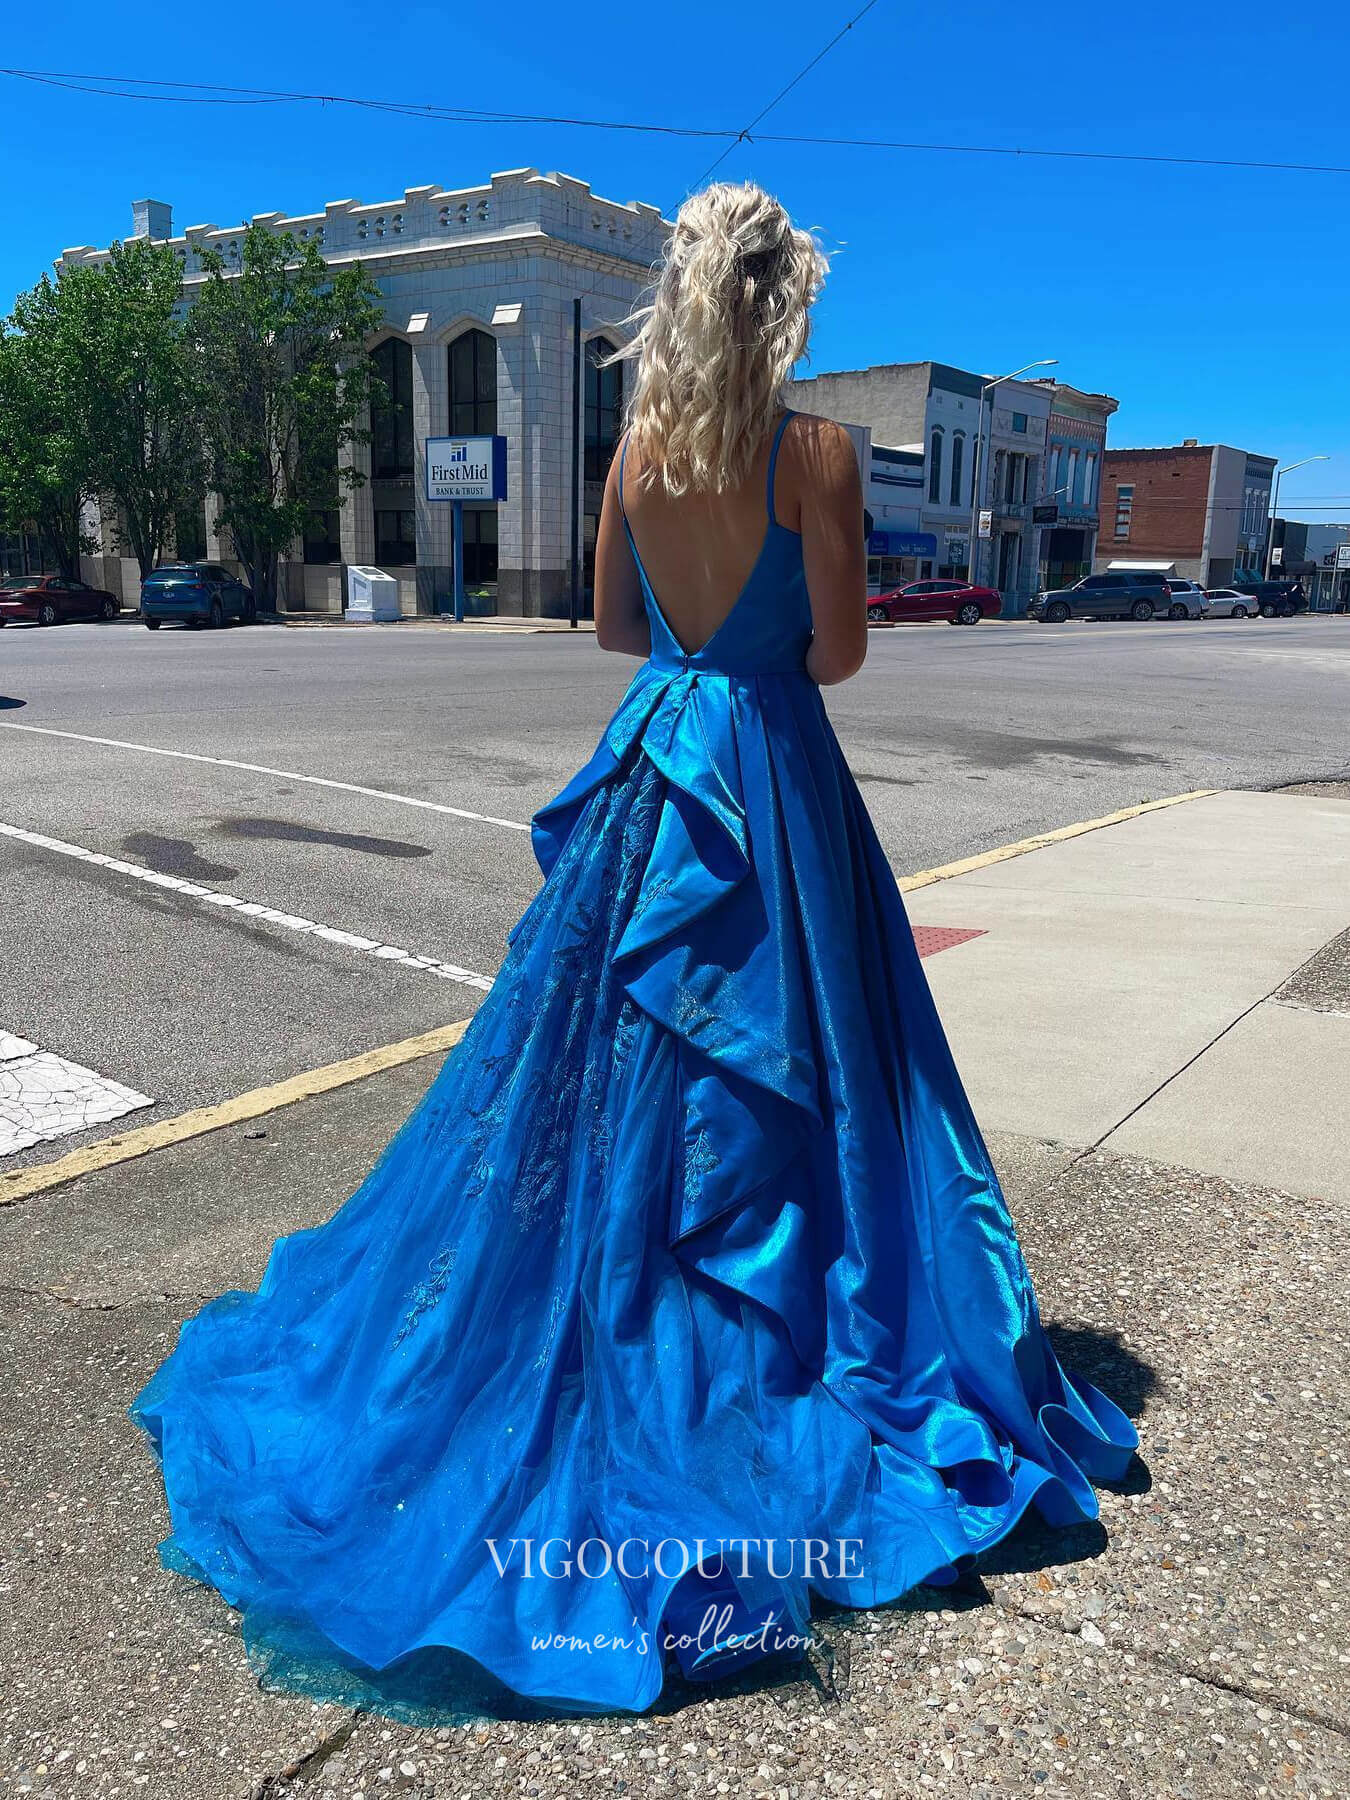 vigocouture-Blue Sparkly Satin Prom Dresses With Pockets Spaghetti Strap Evening Dress 21575-Prom Dresses-vigocouture-